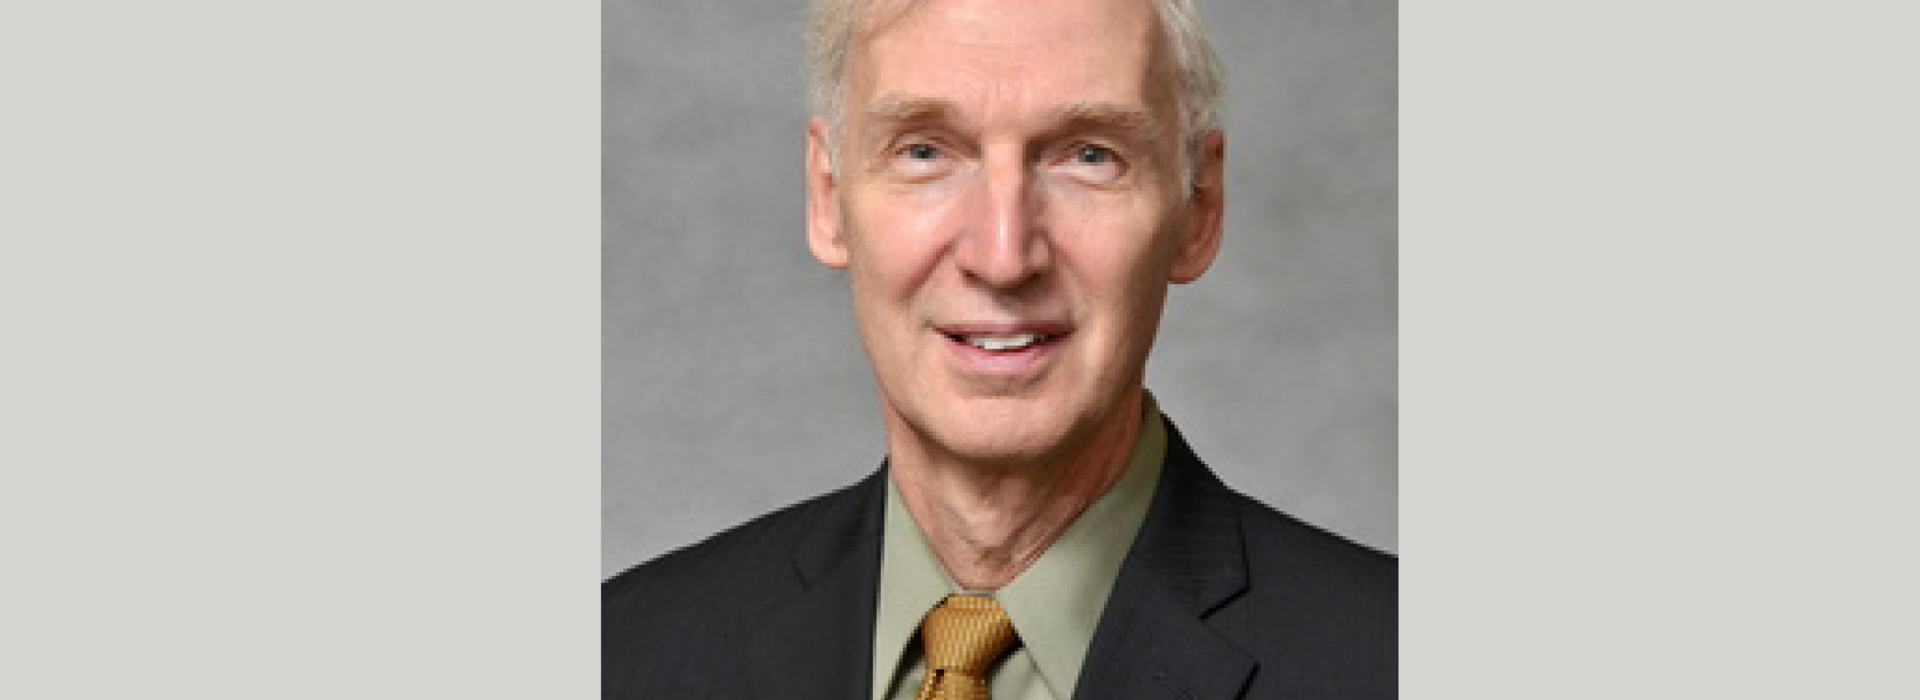 Dr. Richard Prielipp